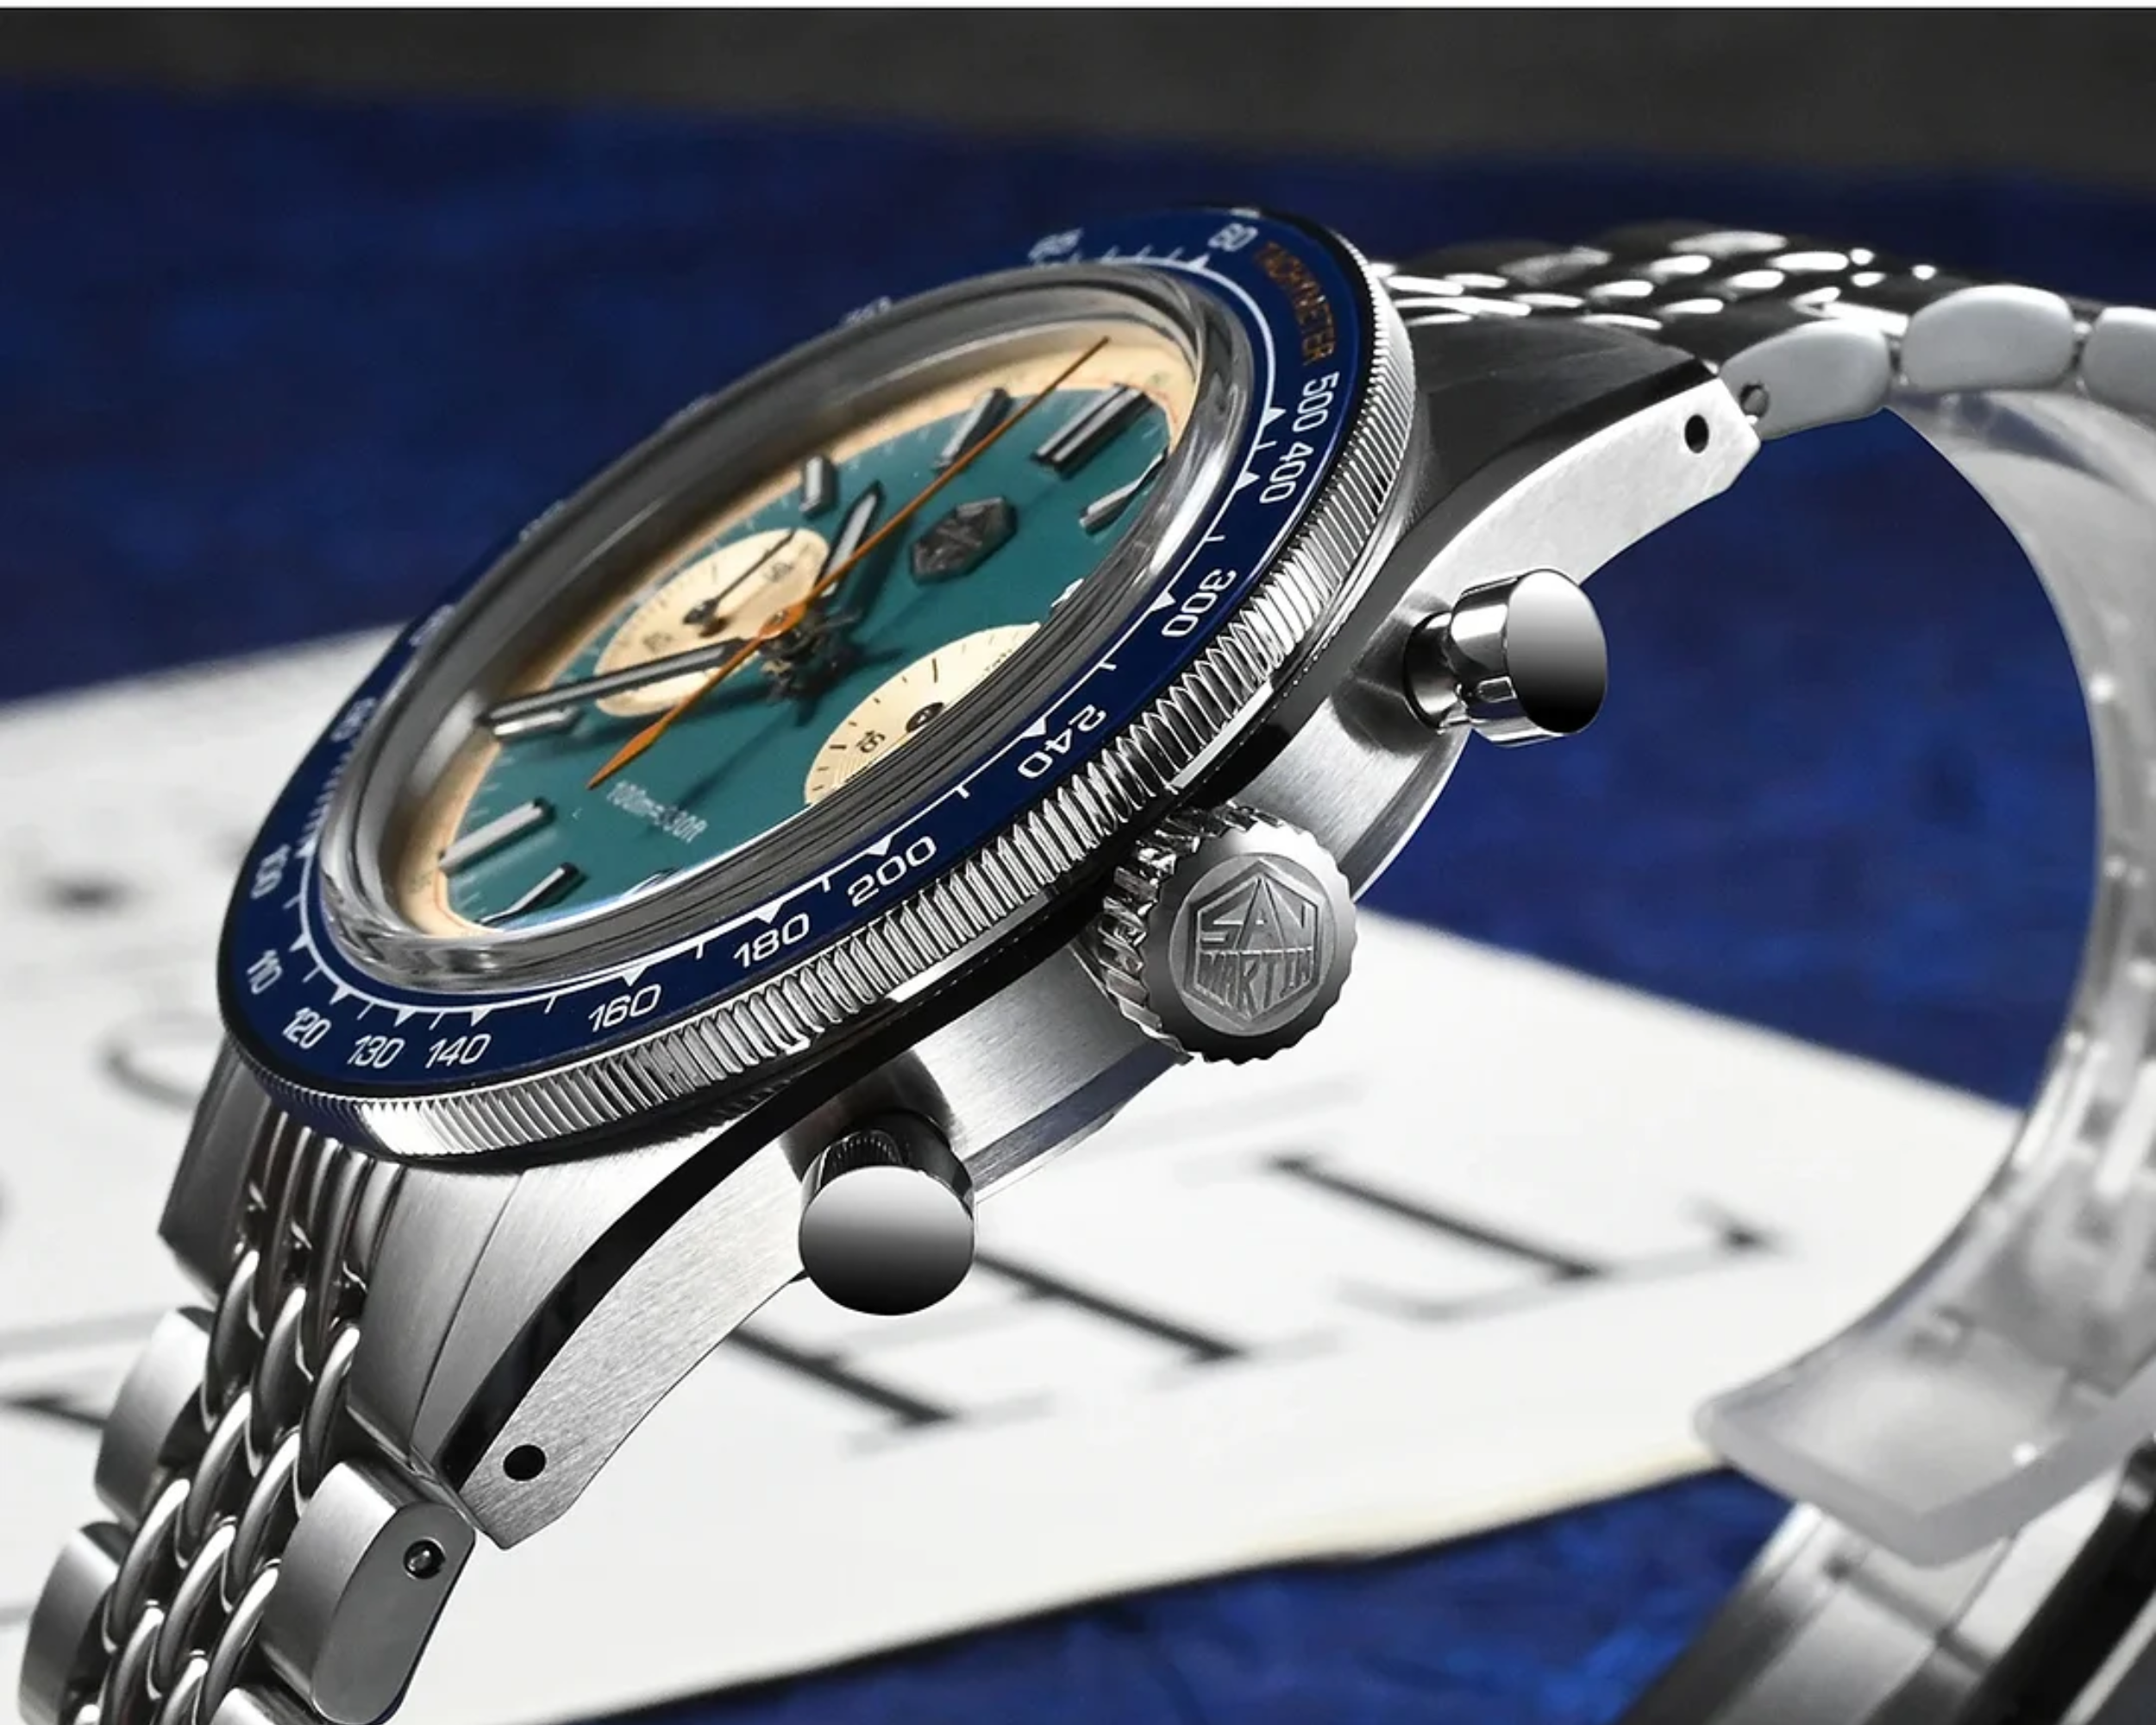 San Martin Chronograph VK64 Quartz Watch Original Design SN0116 - Light Blue